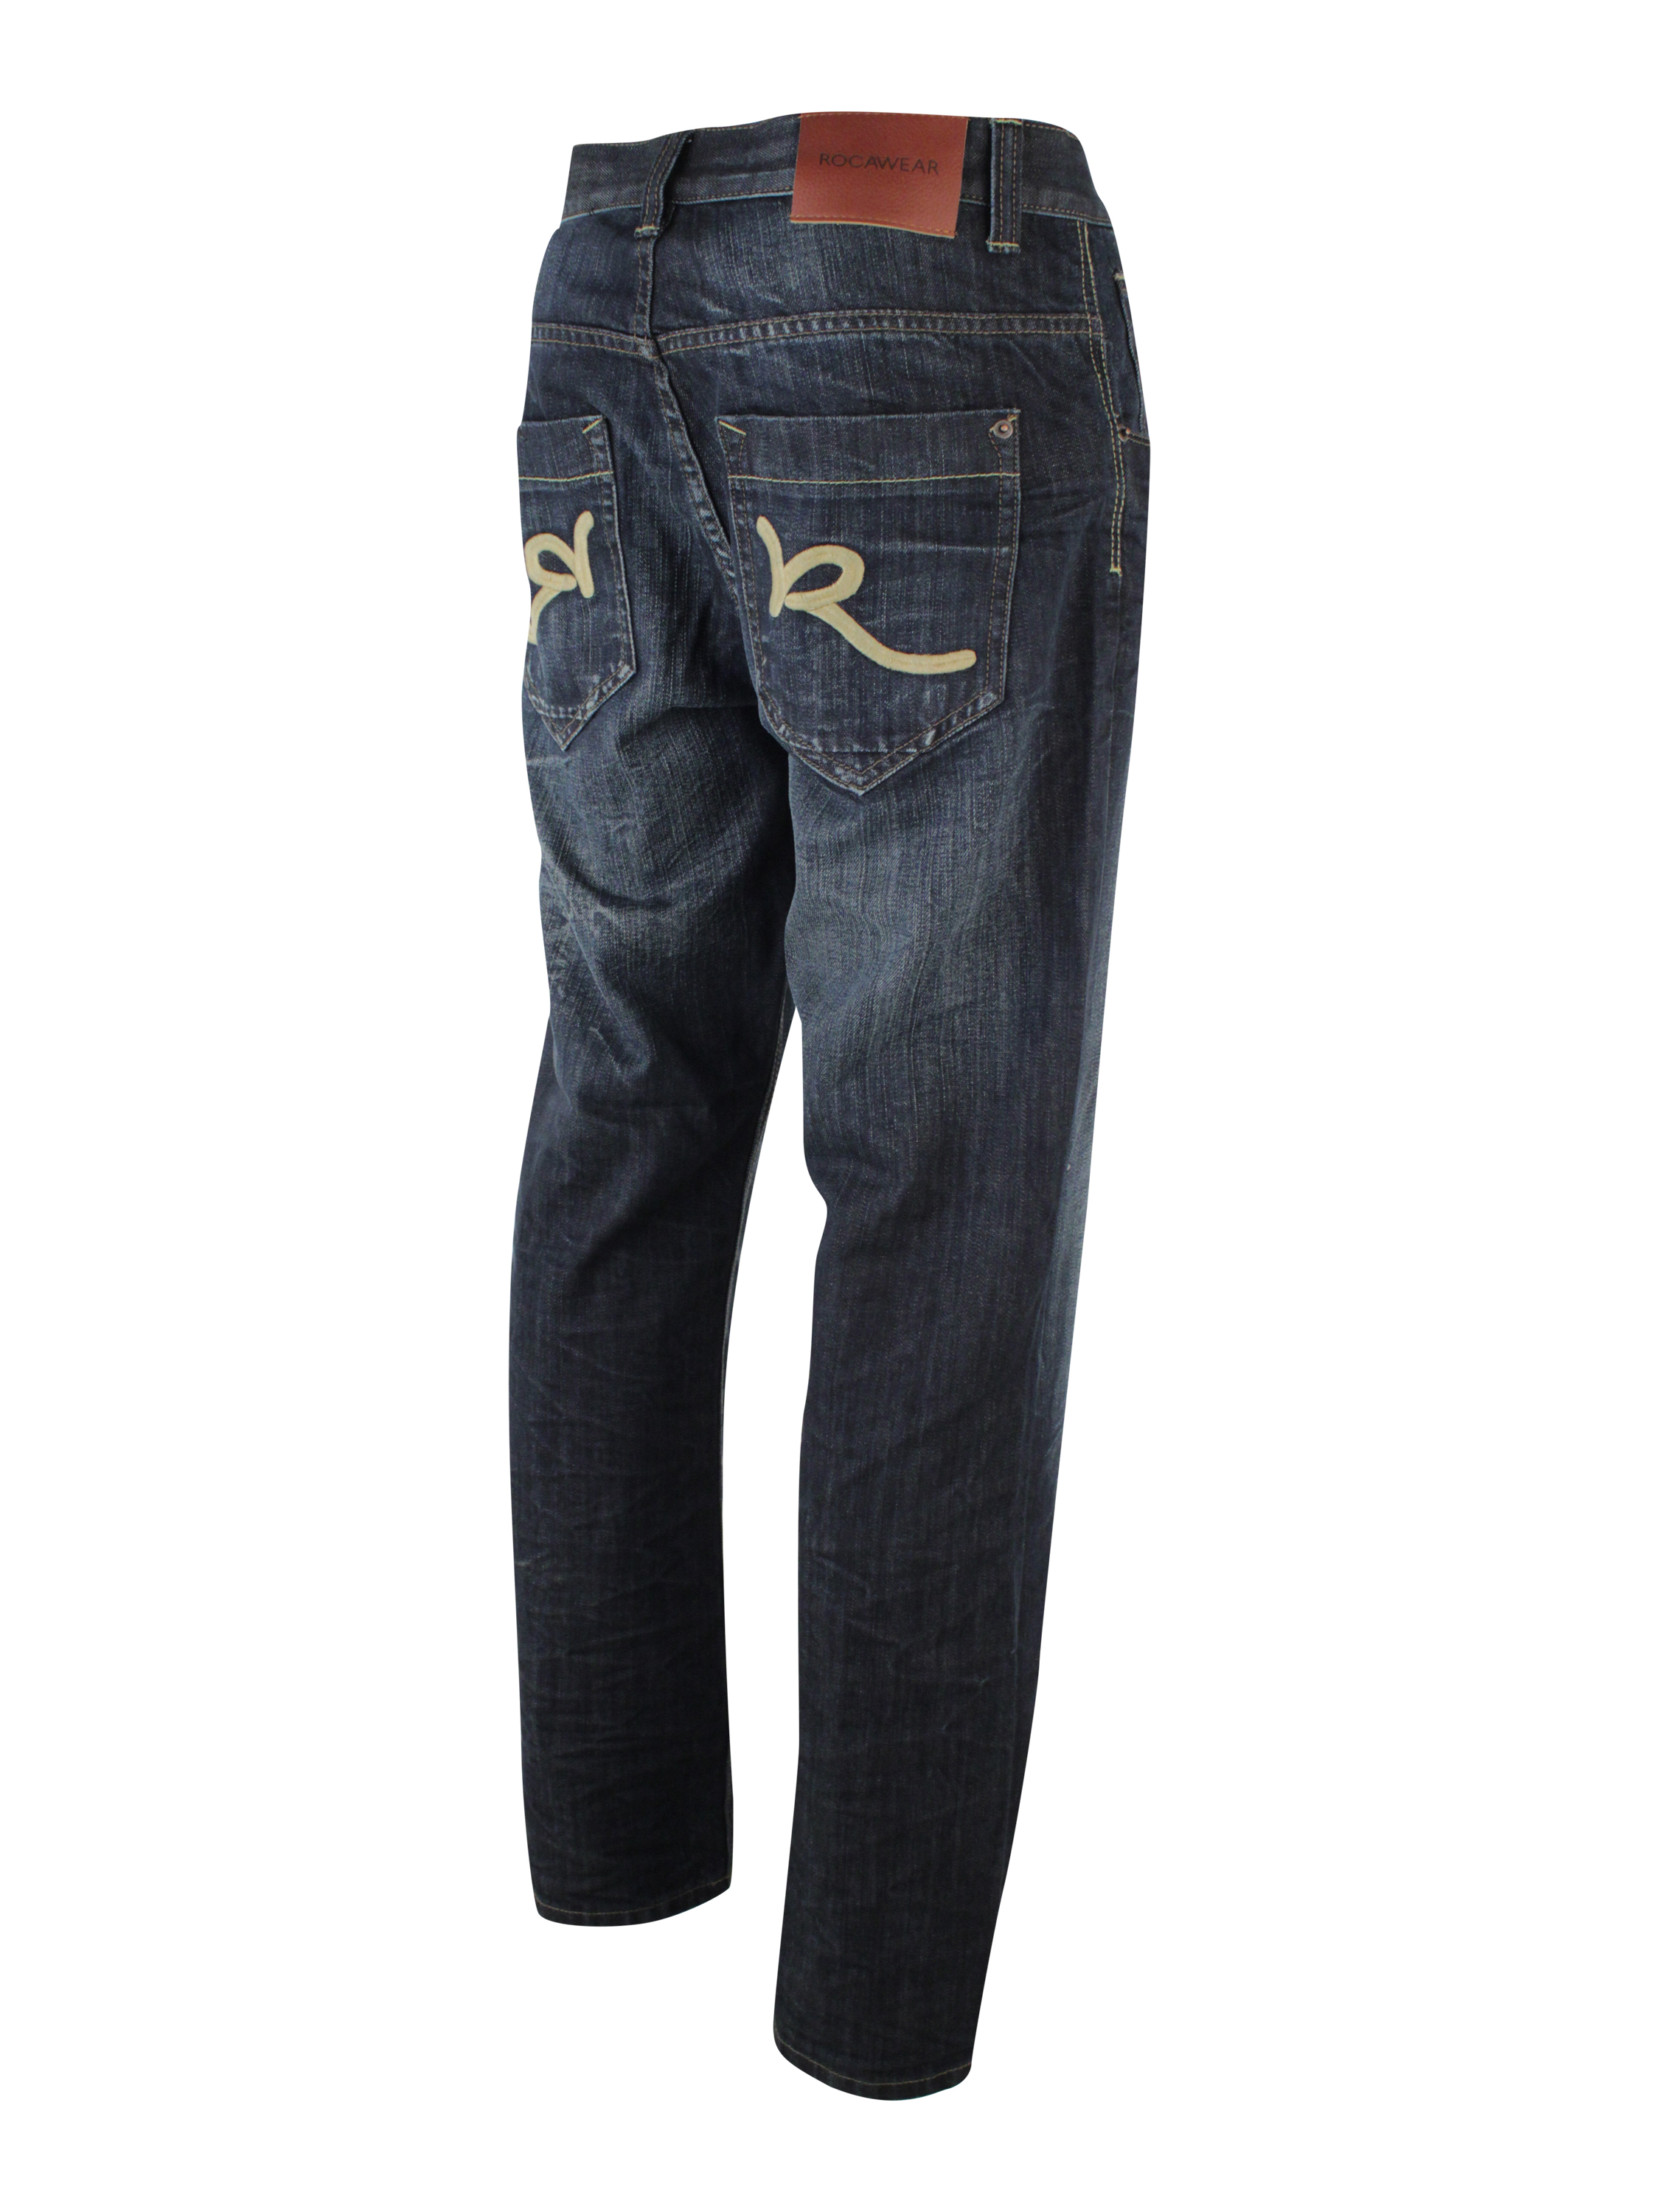 Køb Rocawear 'Double R' Jeans Wash